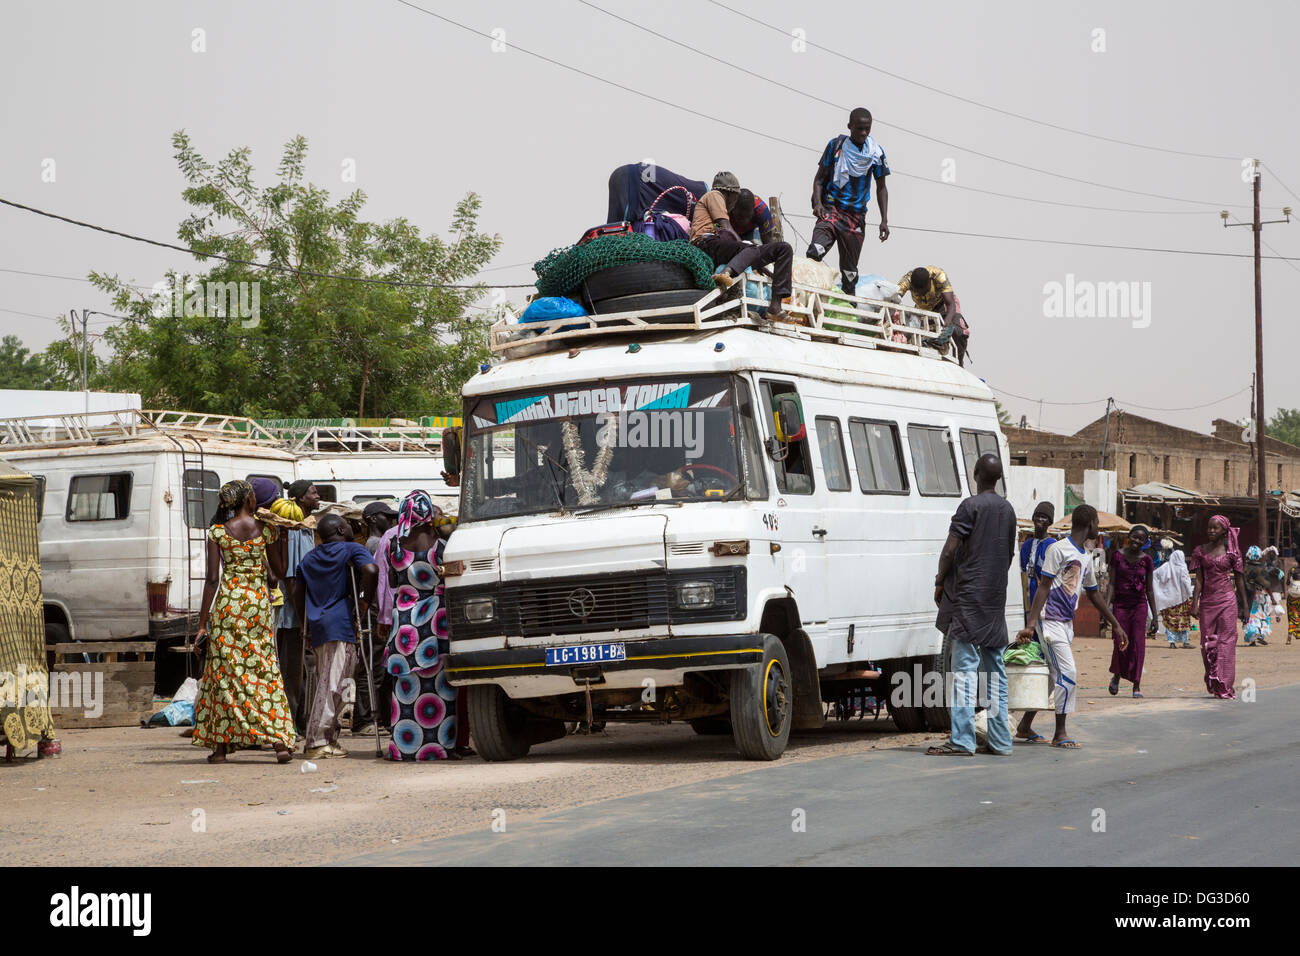 Senegal, Touba. Lokaler Verkehr und Verkehrssicherheit. JM laden waren an der Spitze; einige Passagiere fahren dort. Stockfoto